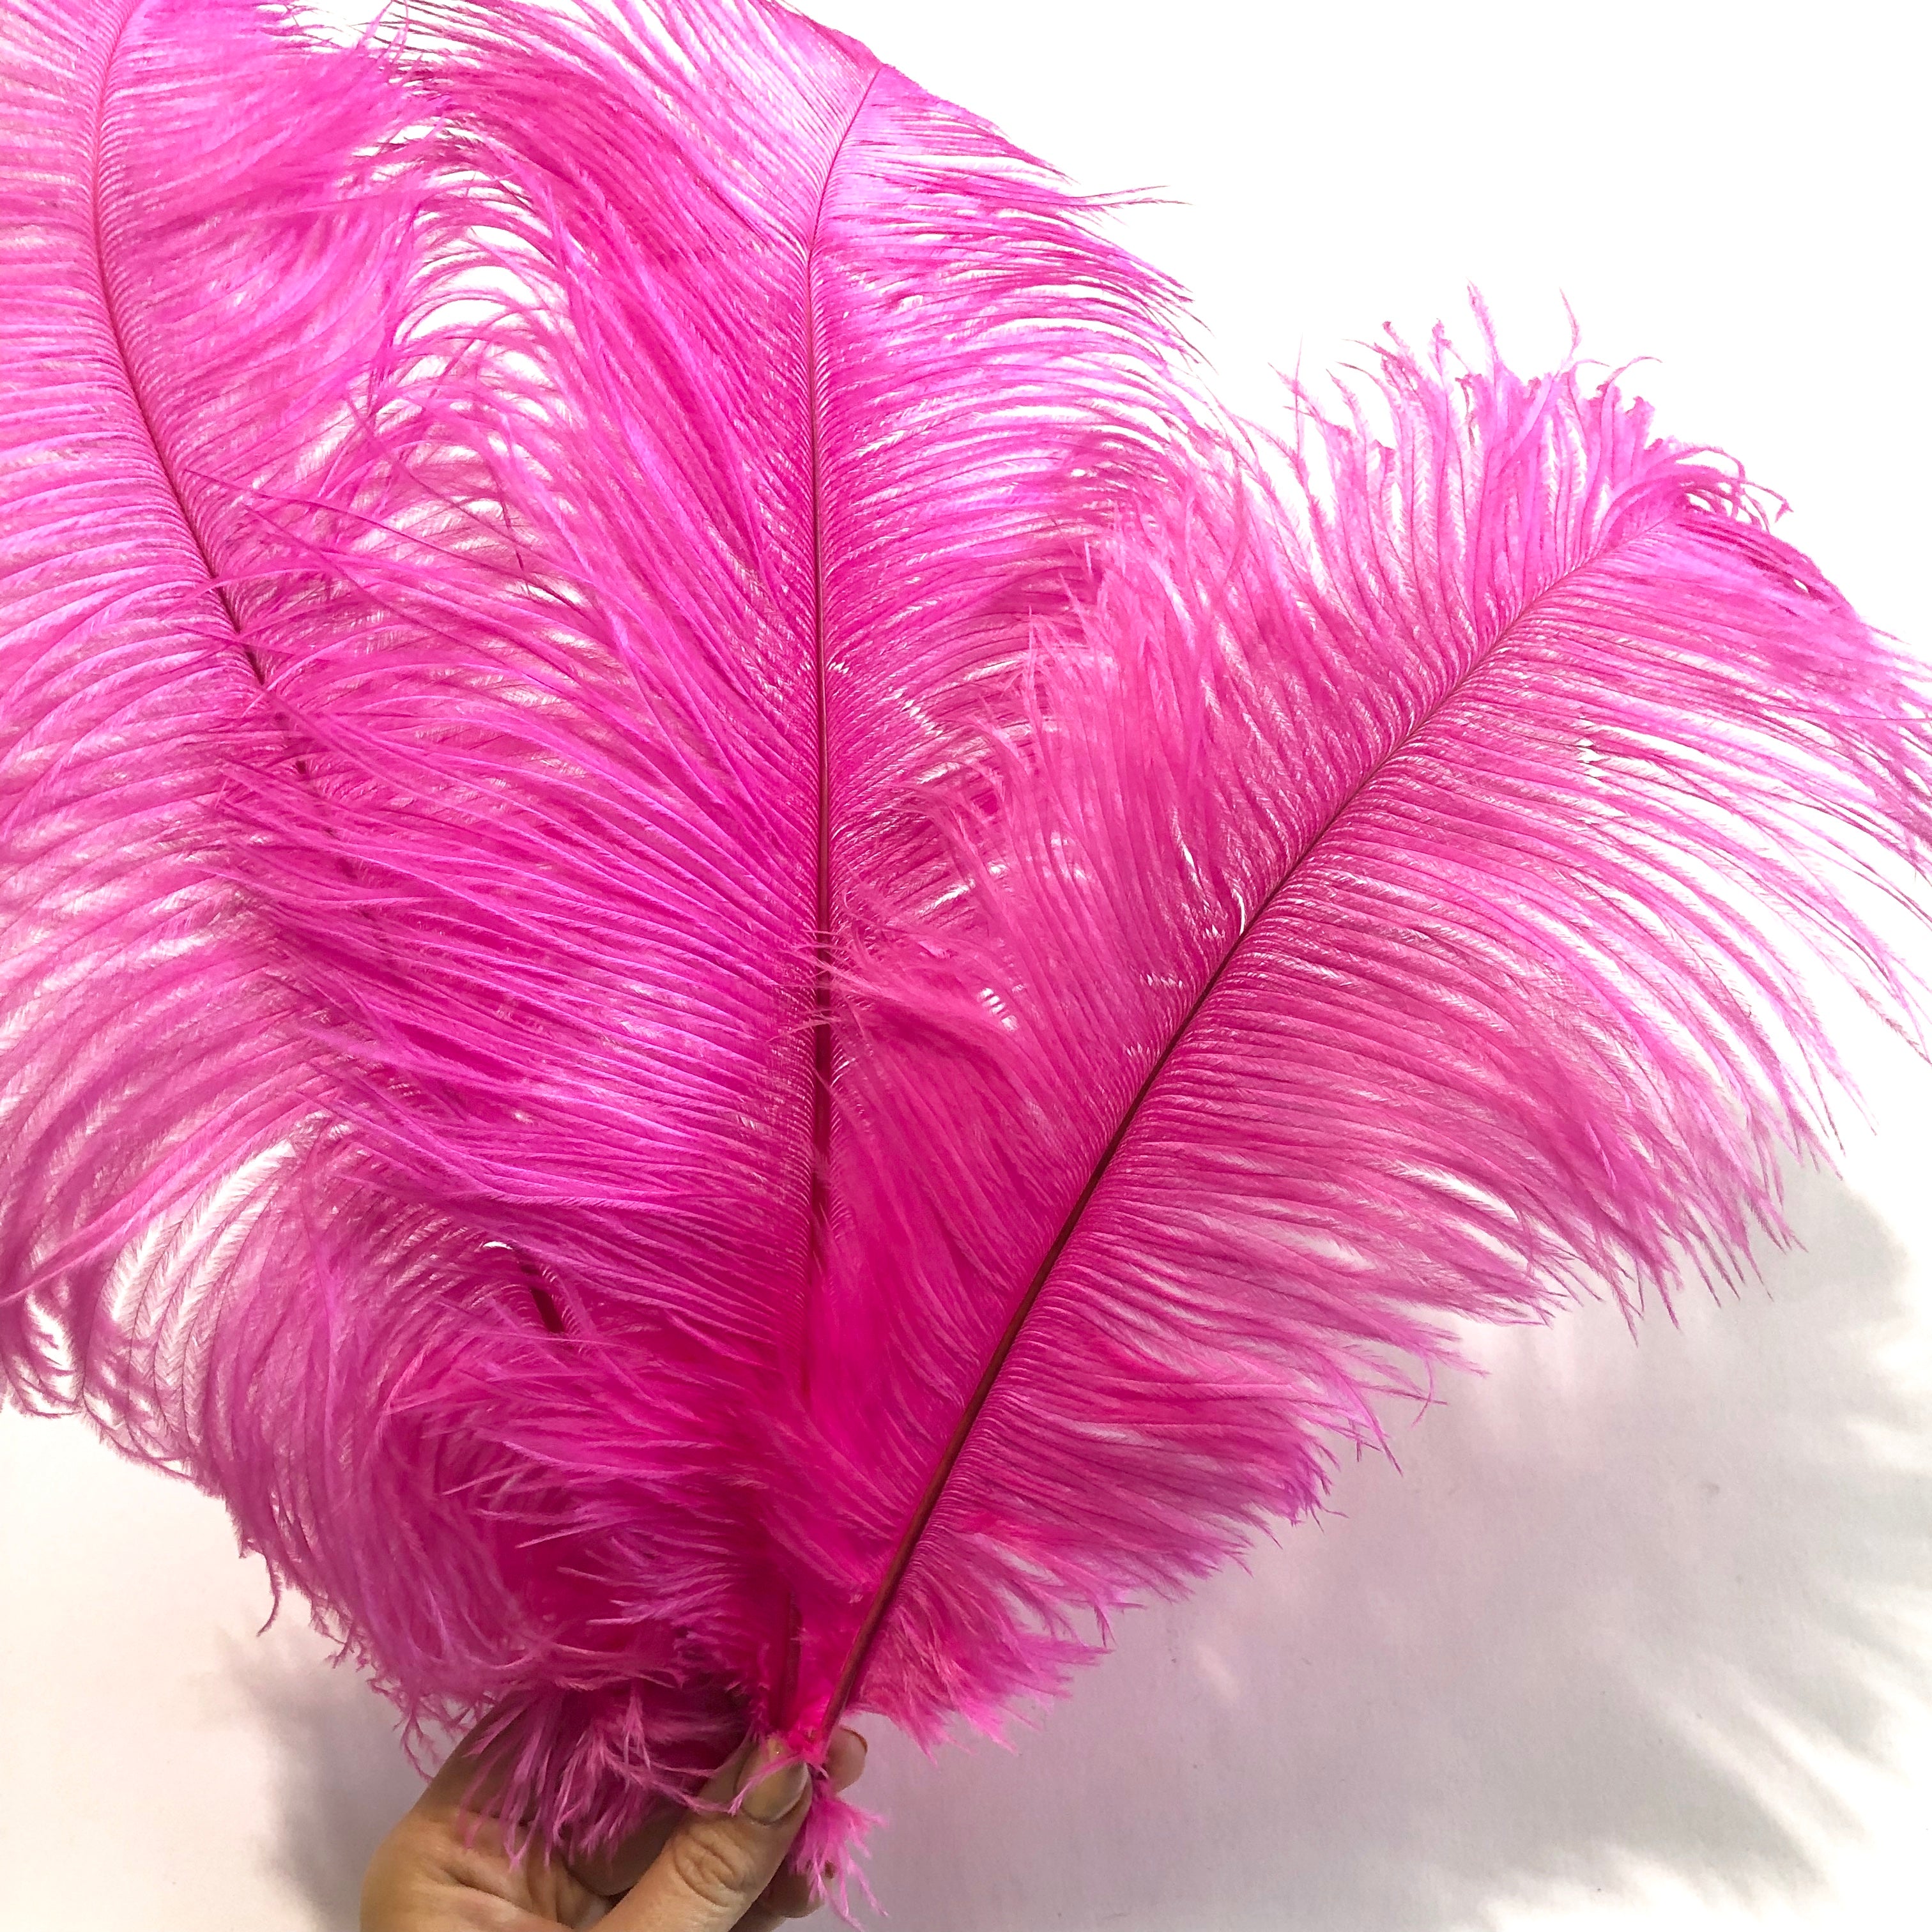 Ostrich Feather Drab 37-42cm x 5 pcs - Hot Pink ((SECONDS))